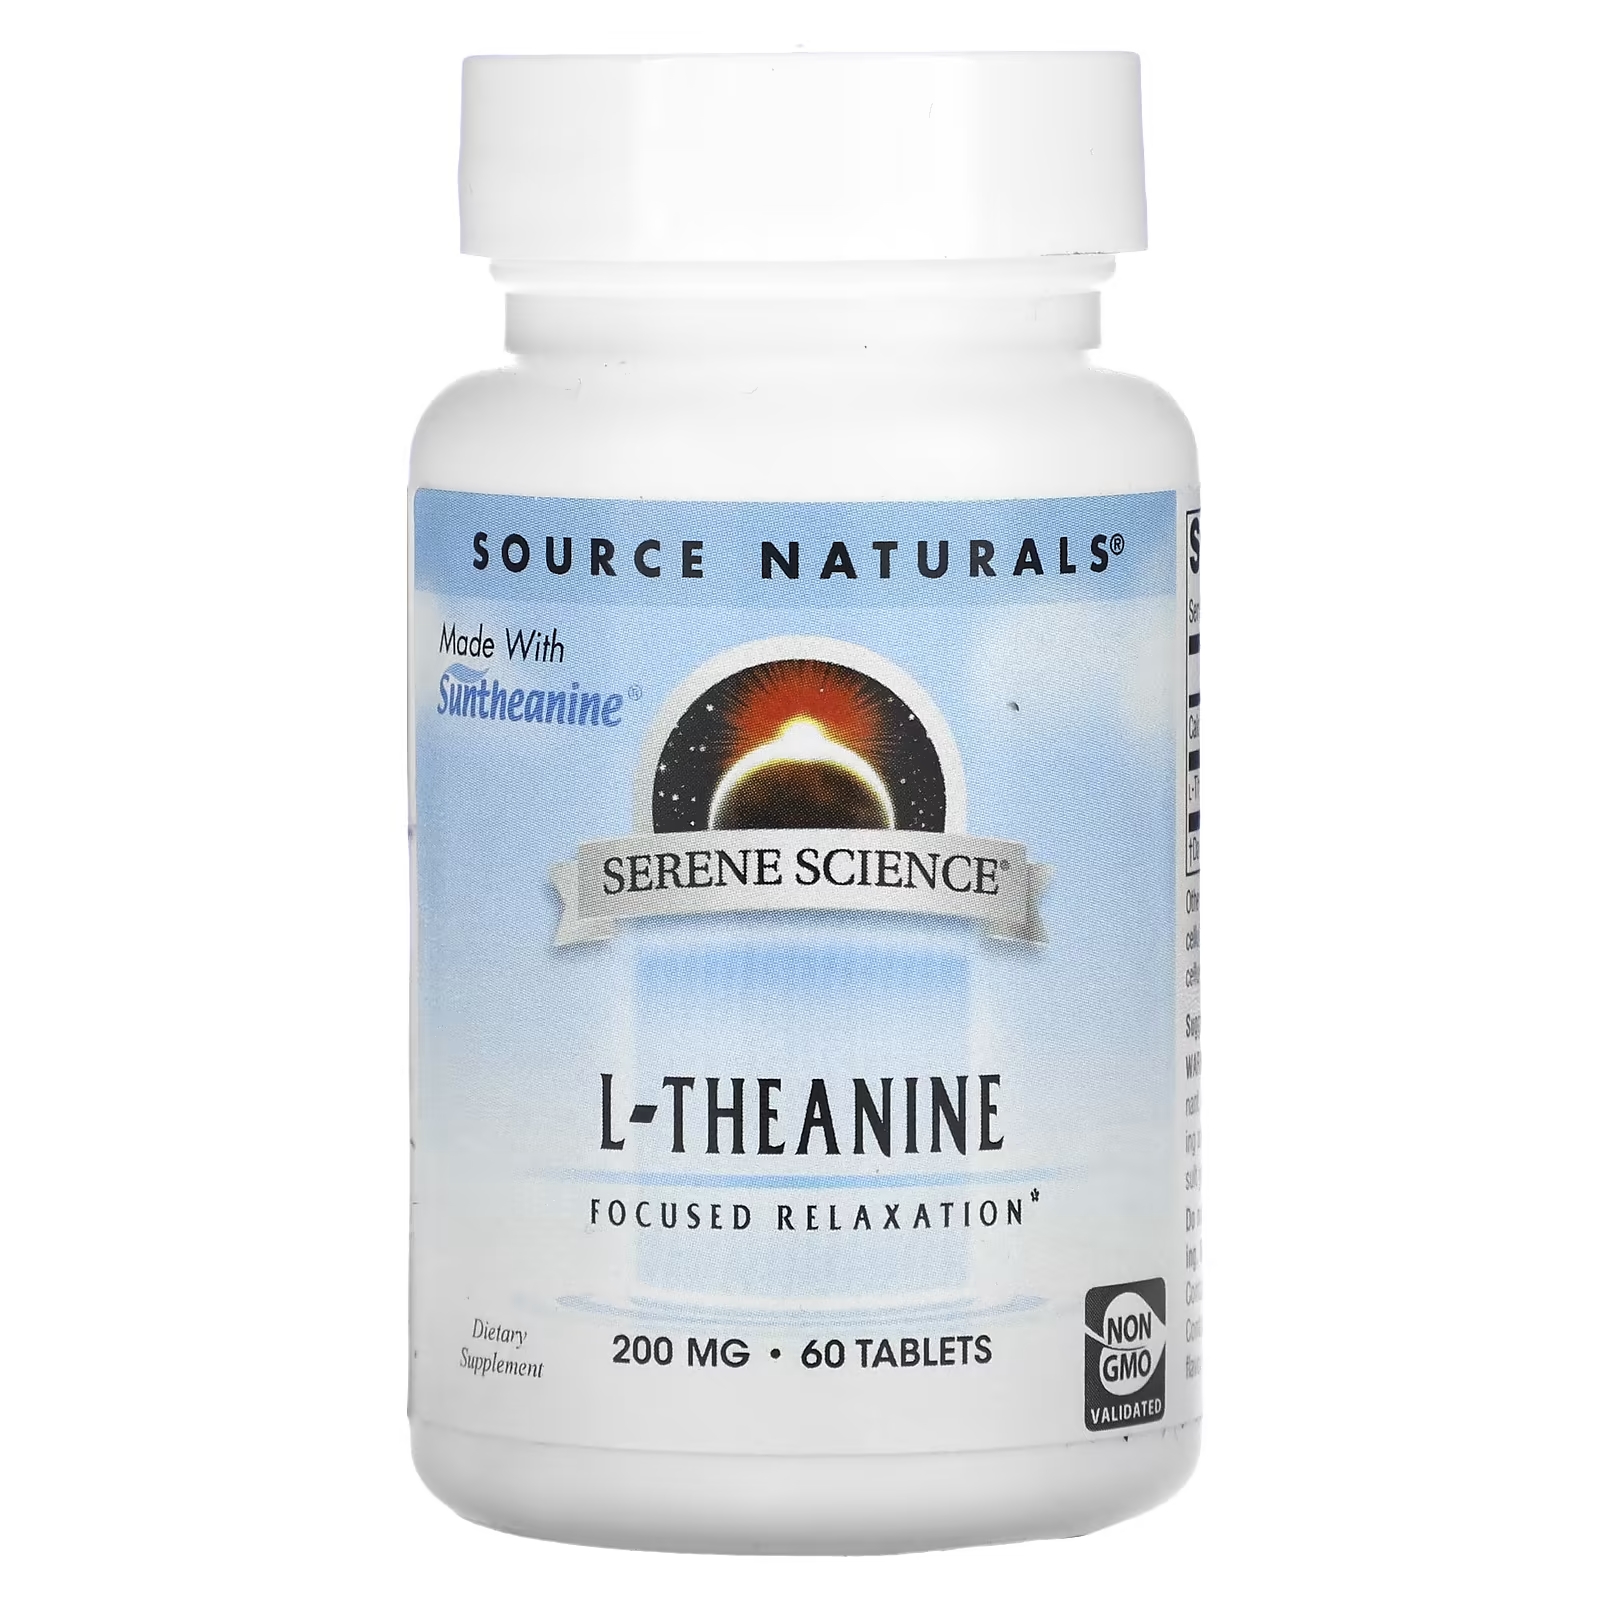 Source Naturals L-теанин 200 мг, 60 таблеток ресвератрол 200 source naturals 60 таблеток